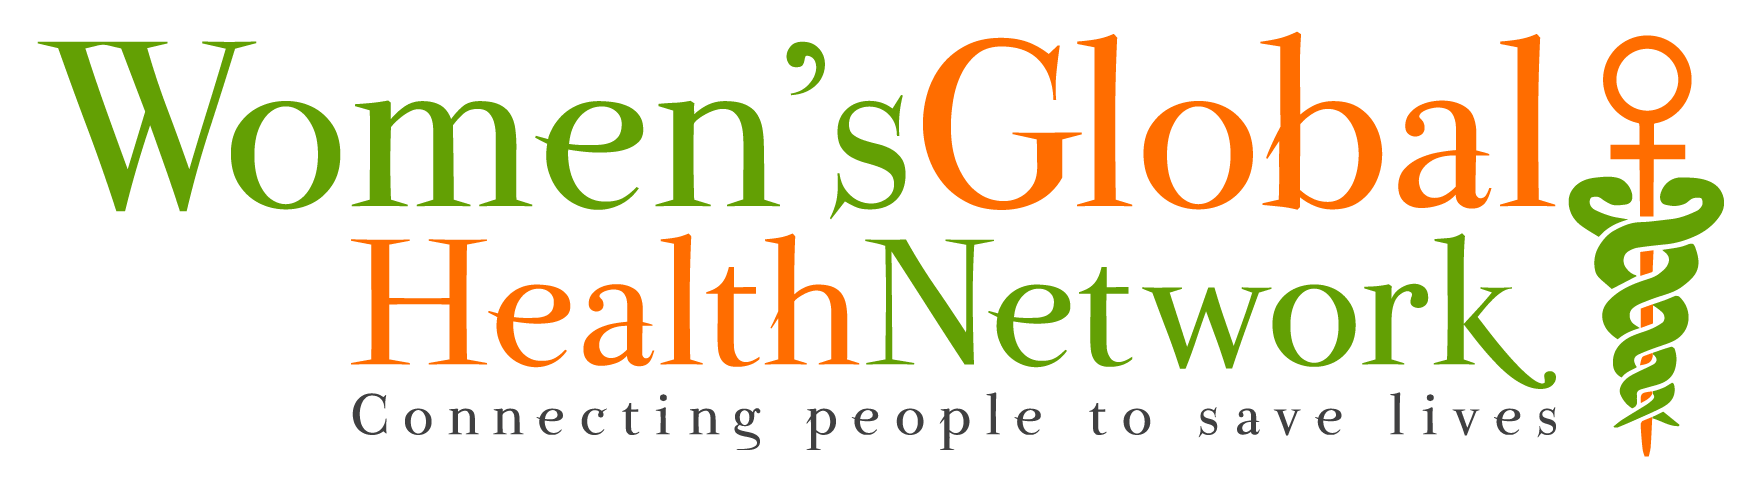 Women’s Global Health Network